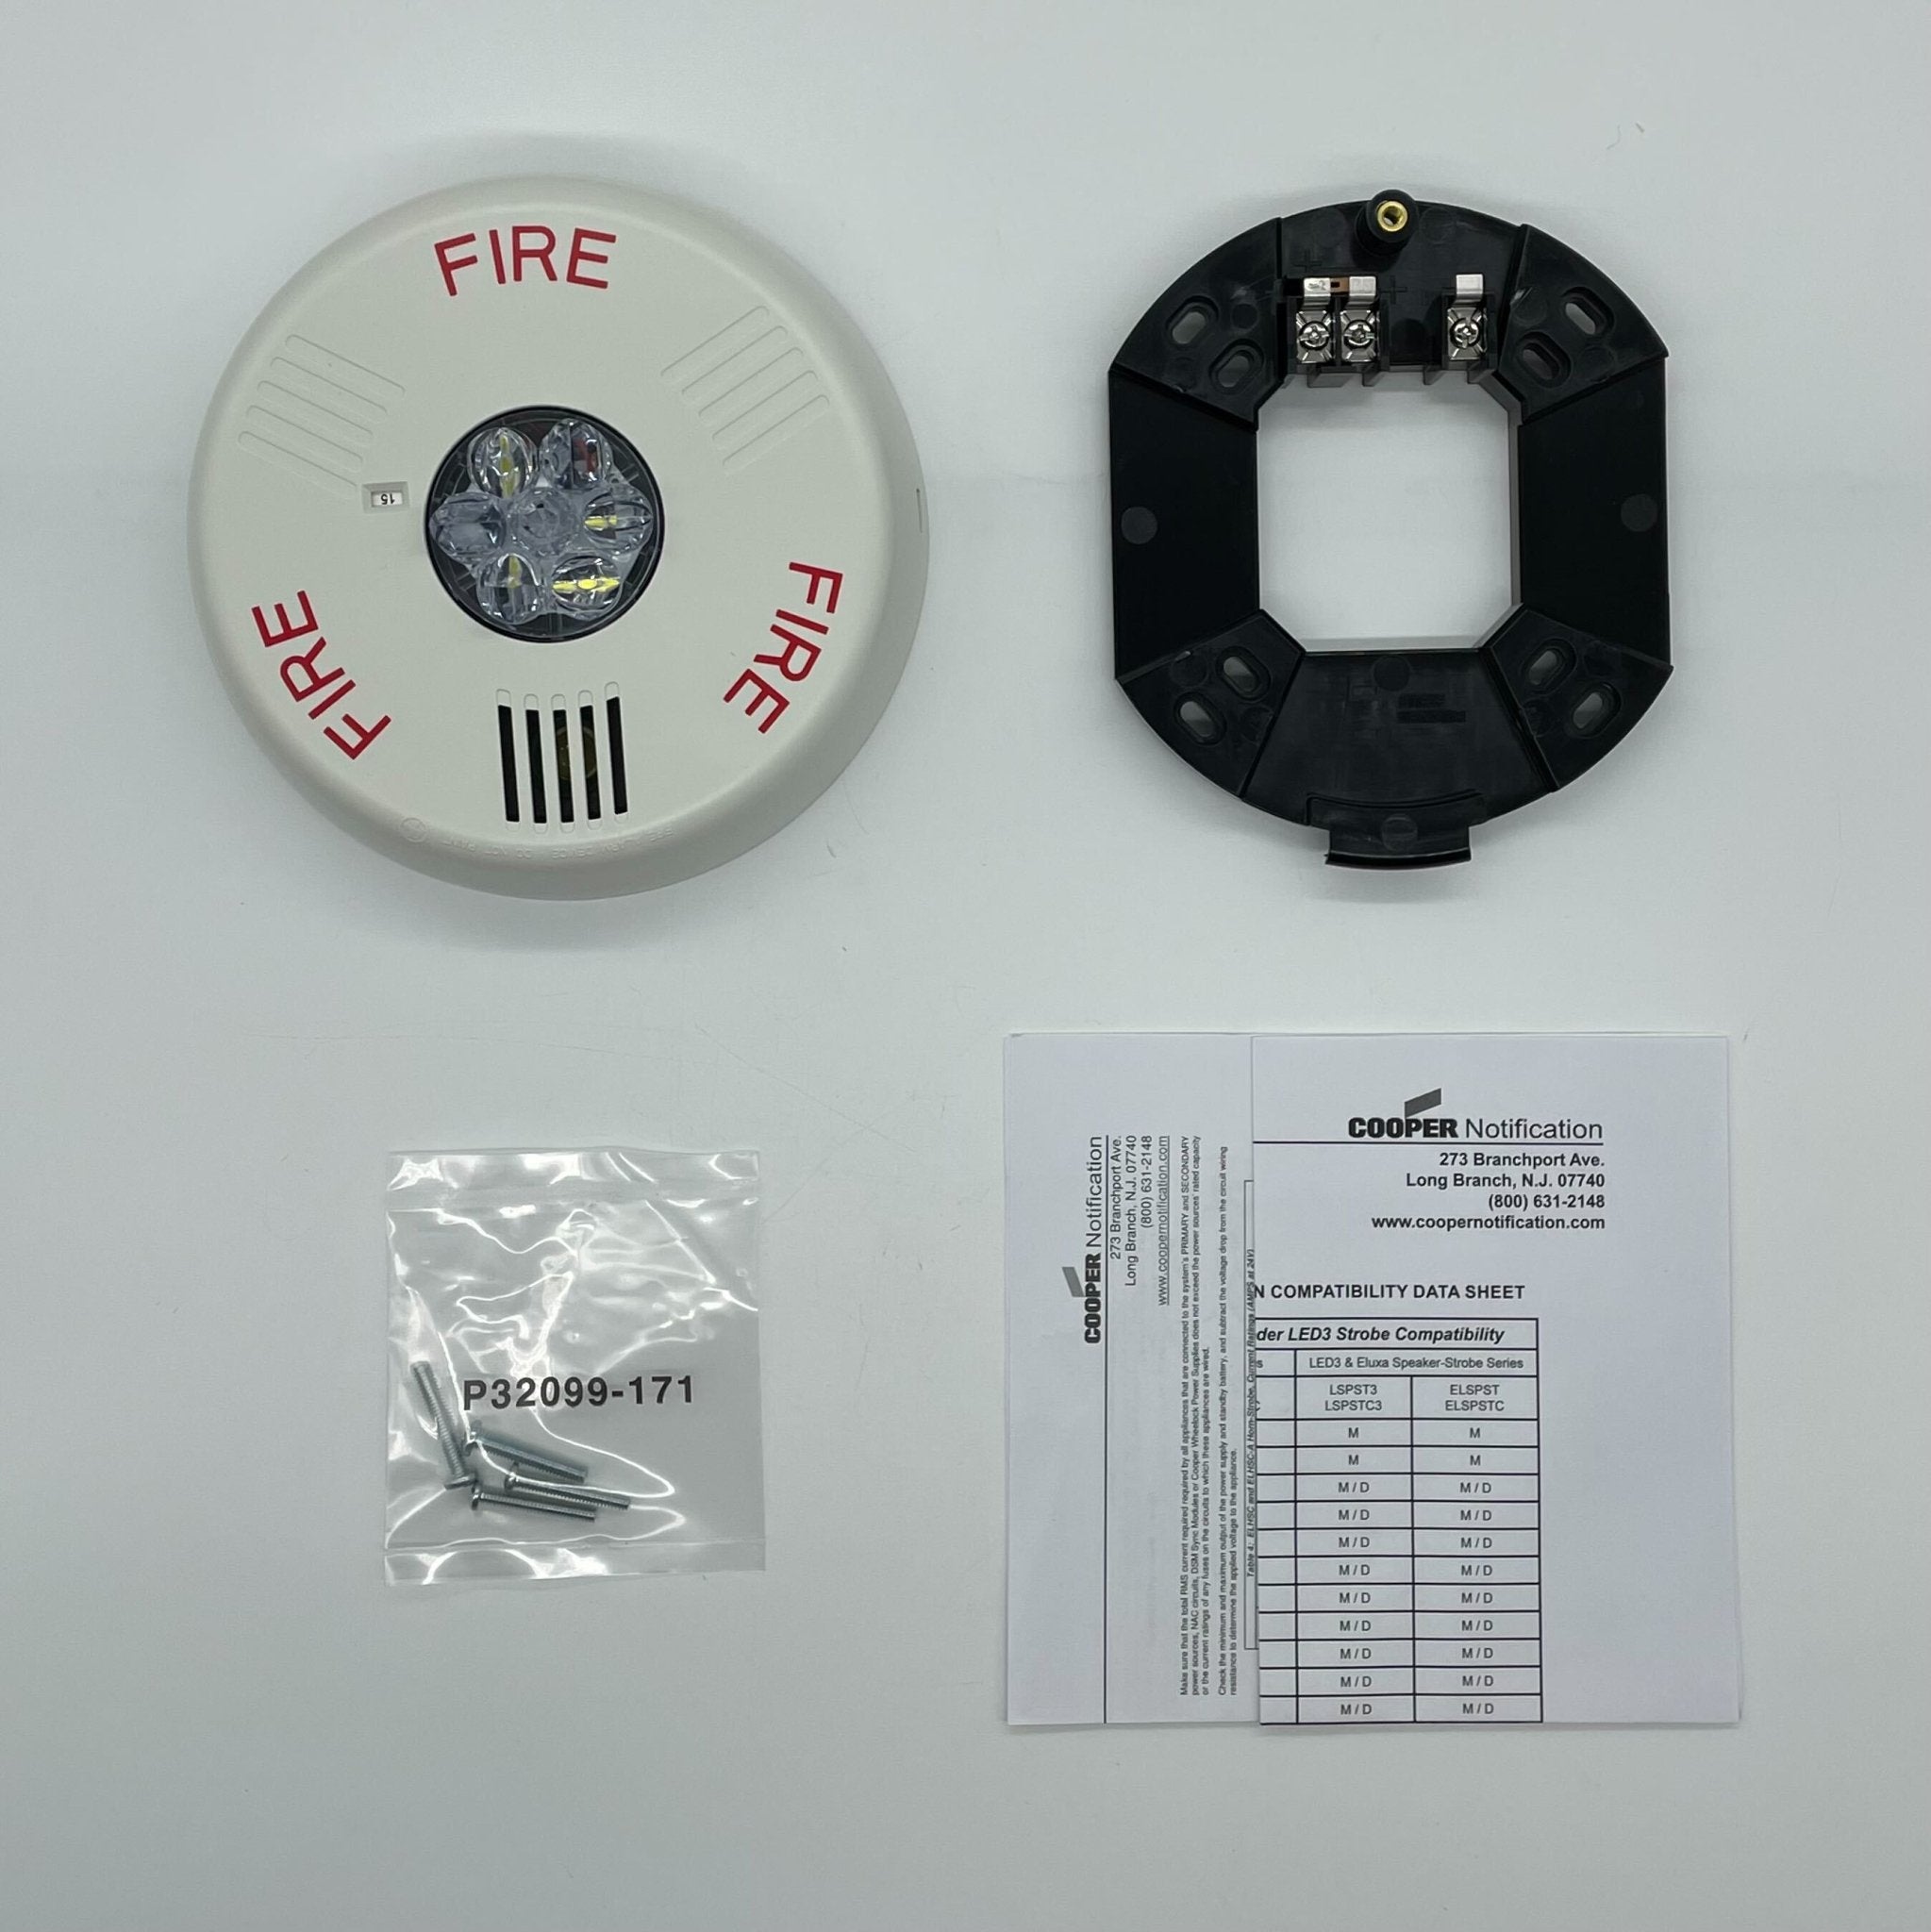 Wheelock ELHSWC - The Fire Alarm Supplier